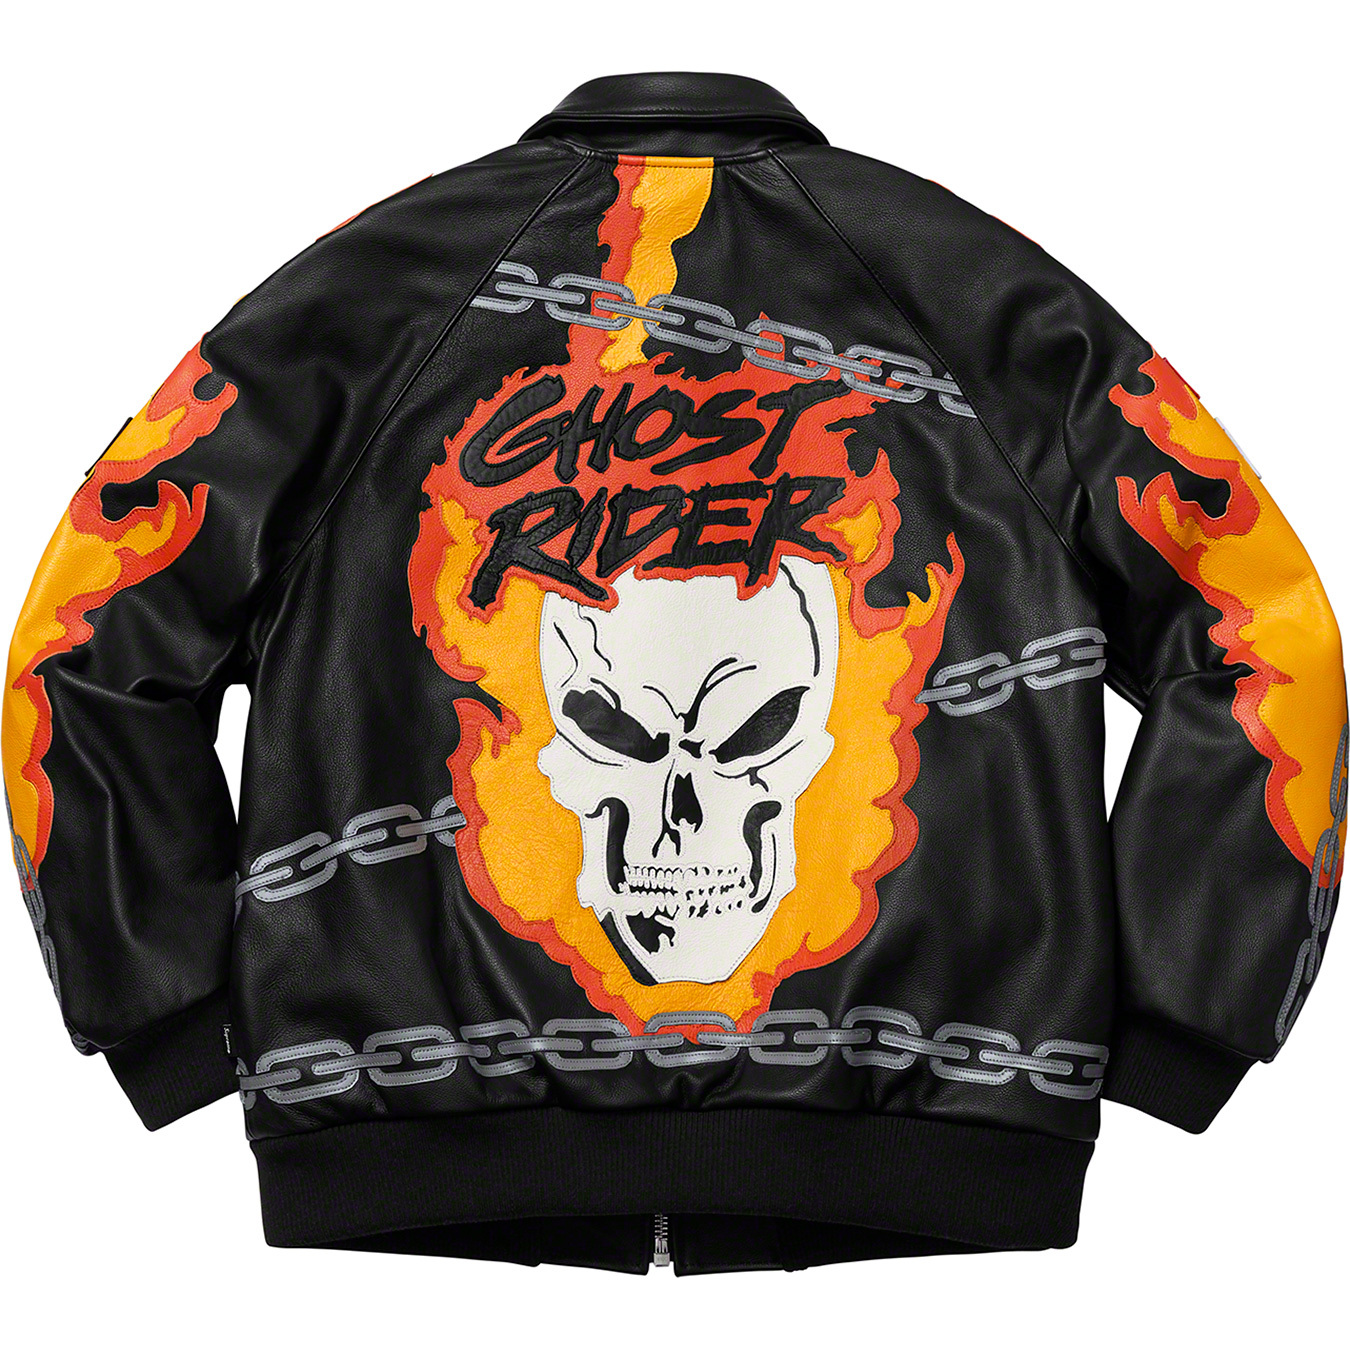 Details Supreme Supreme®/Vanson Leathers® Ghost Rider© Jacket - Supreme ...